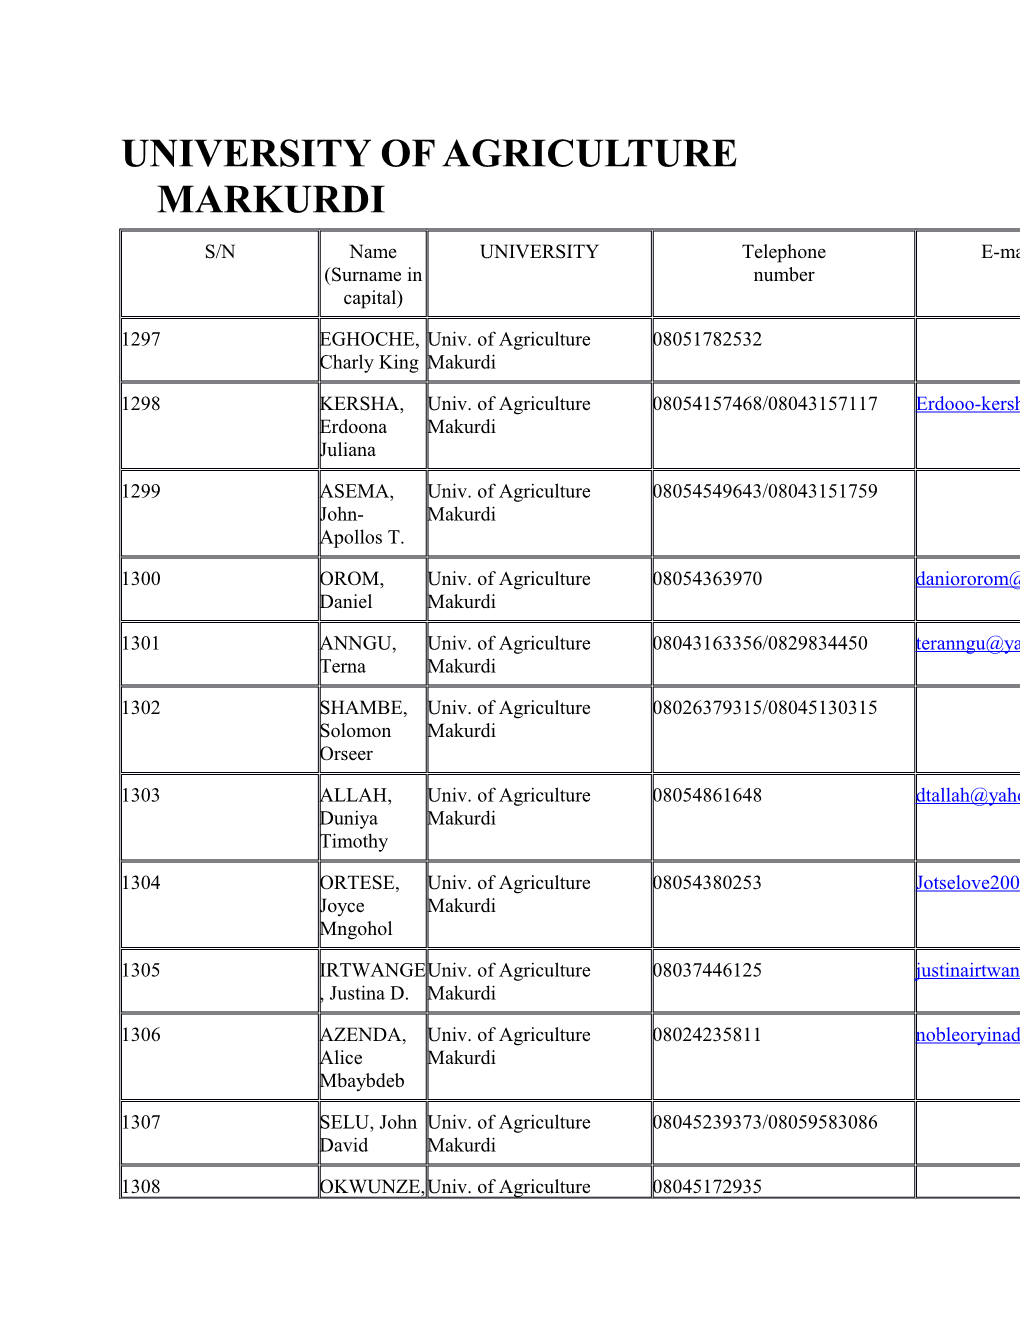 University of Agriculture Markurdi